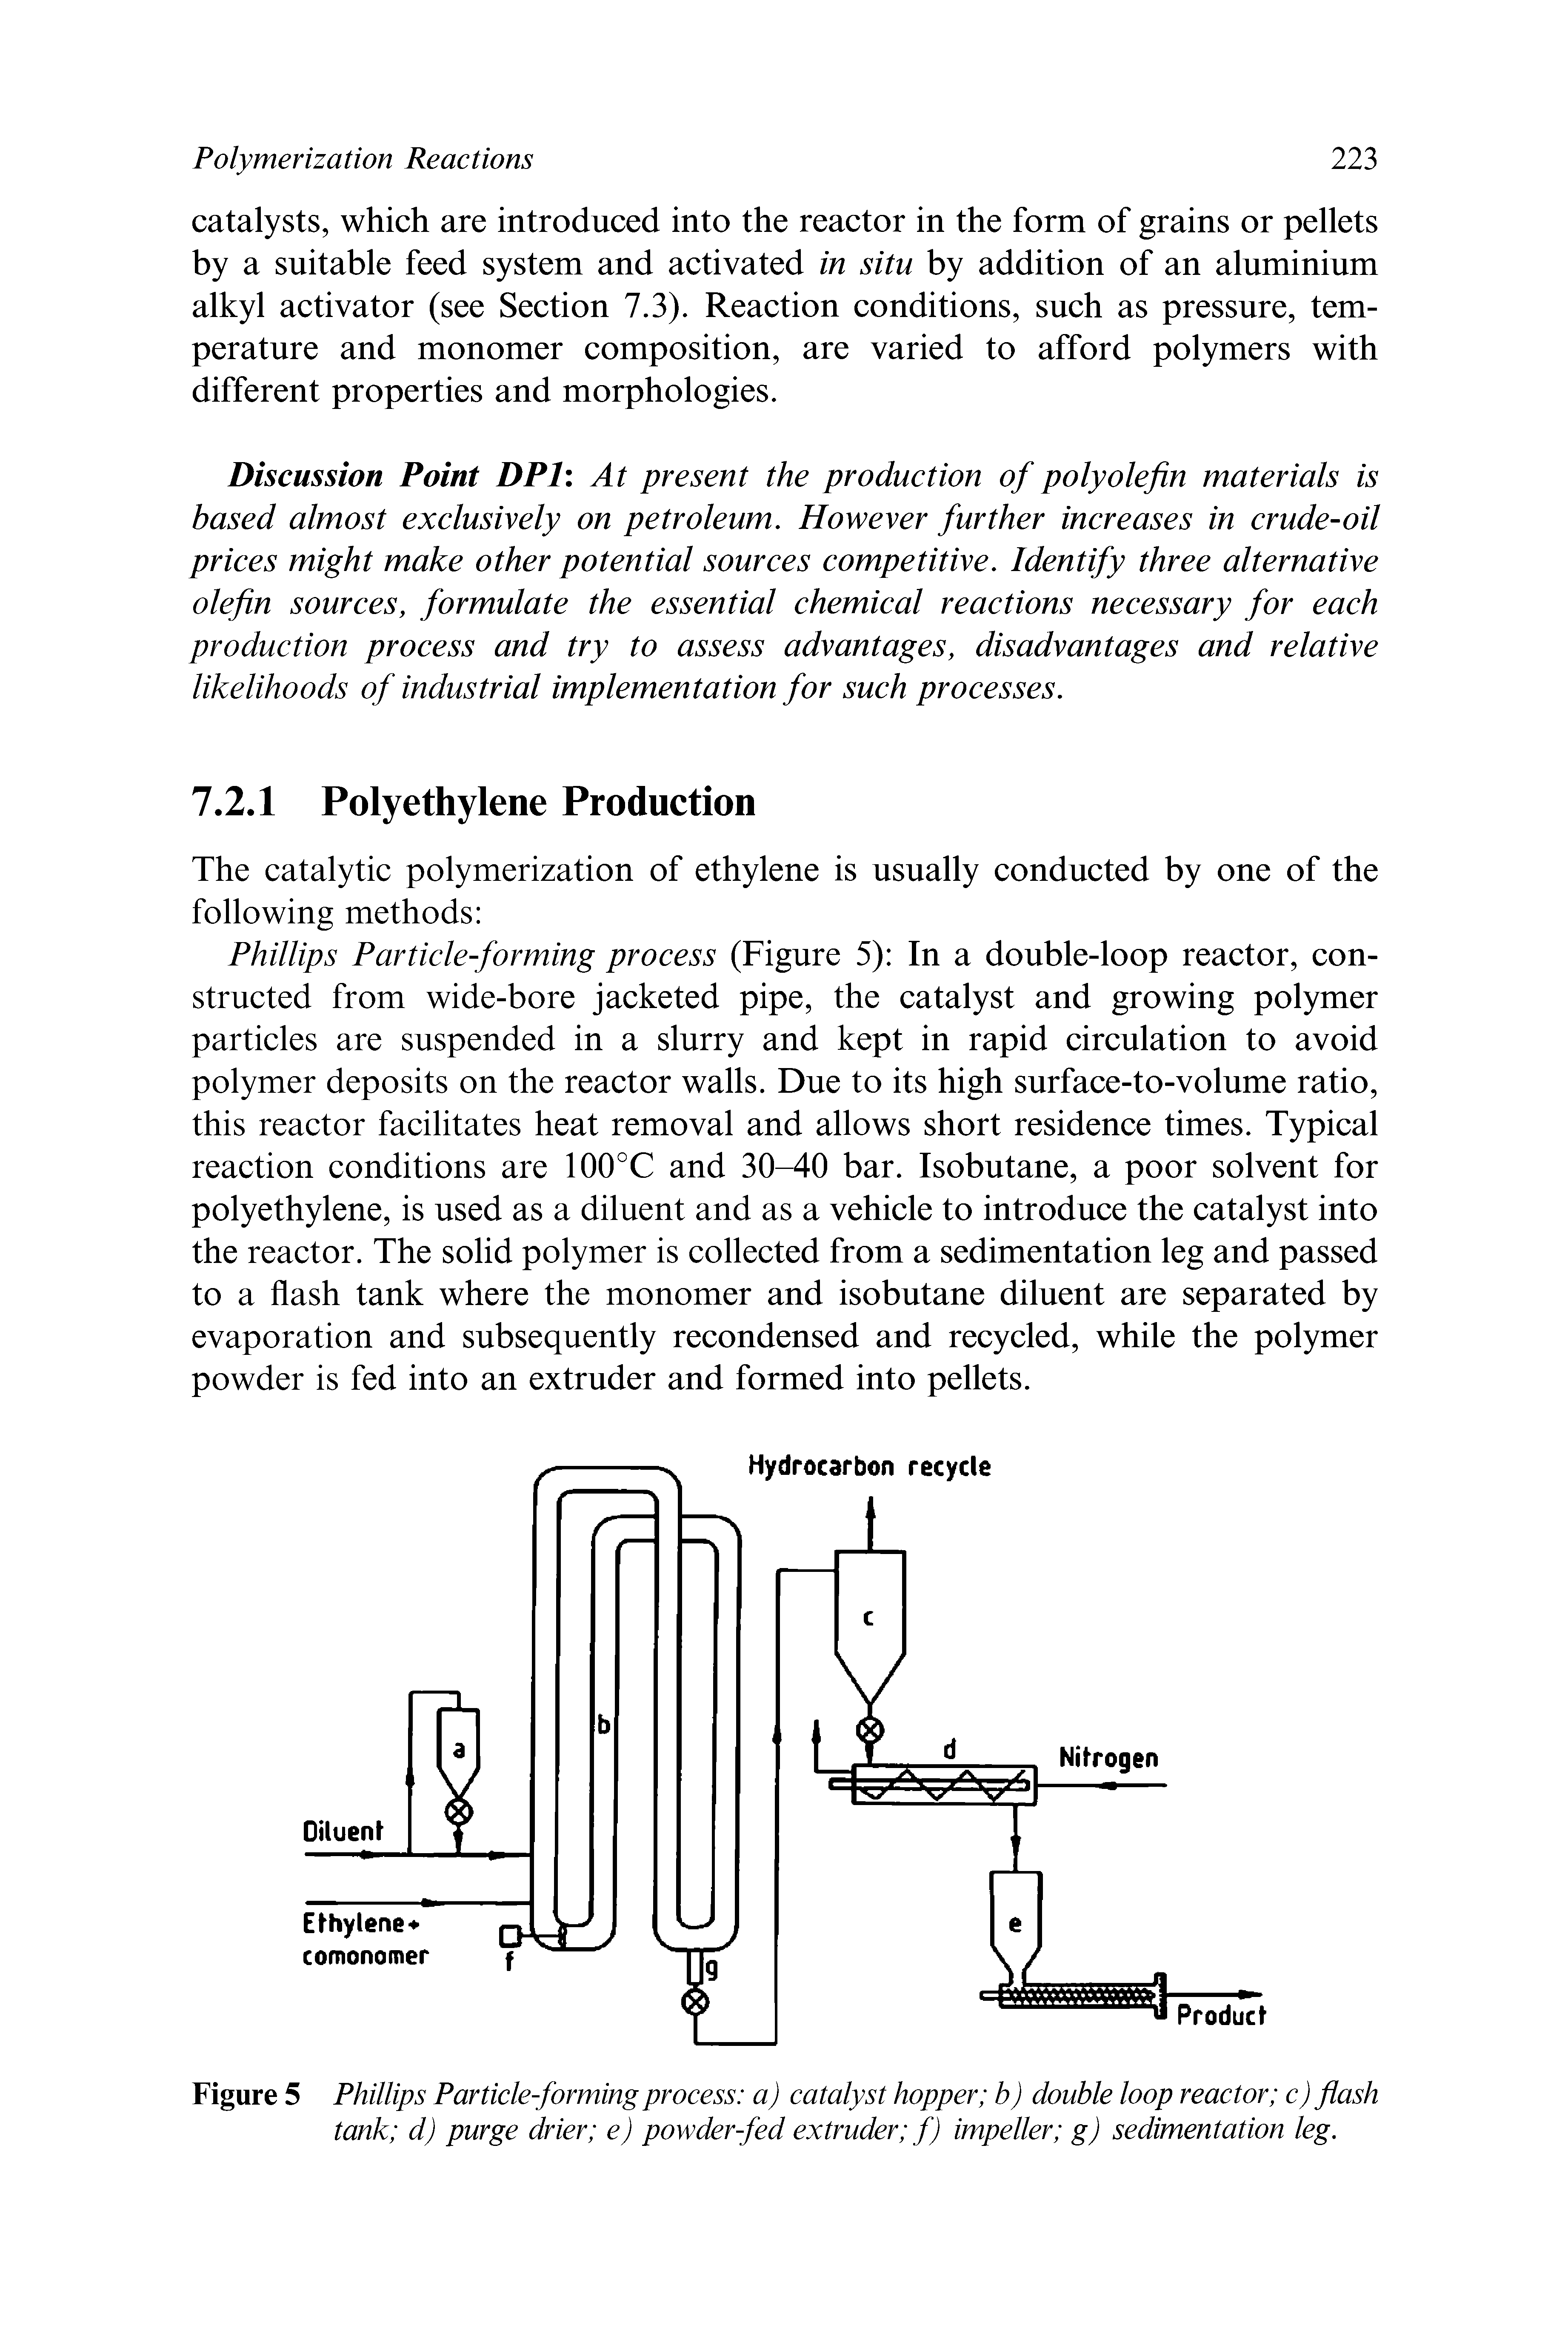 Figure 5 Phillips Particle-forming process a) catalyst hopper b) double loop reactor c) flash tank d) purge drier e) powder-fed extruder f) impeller g) sedimentation leg.